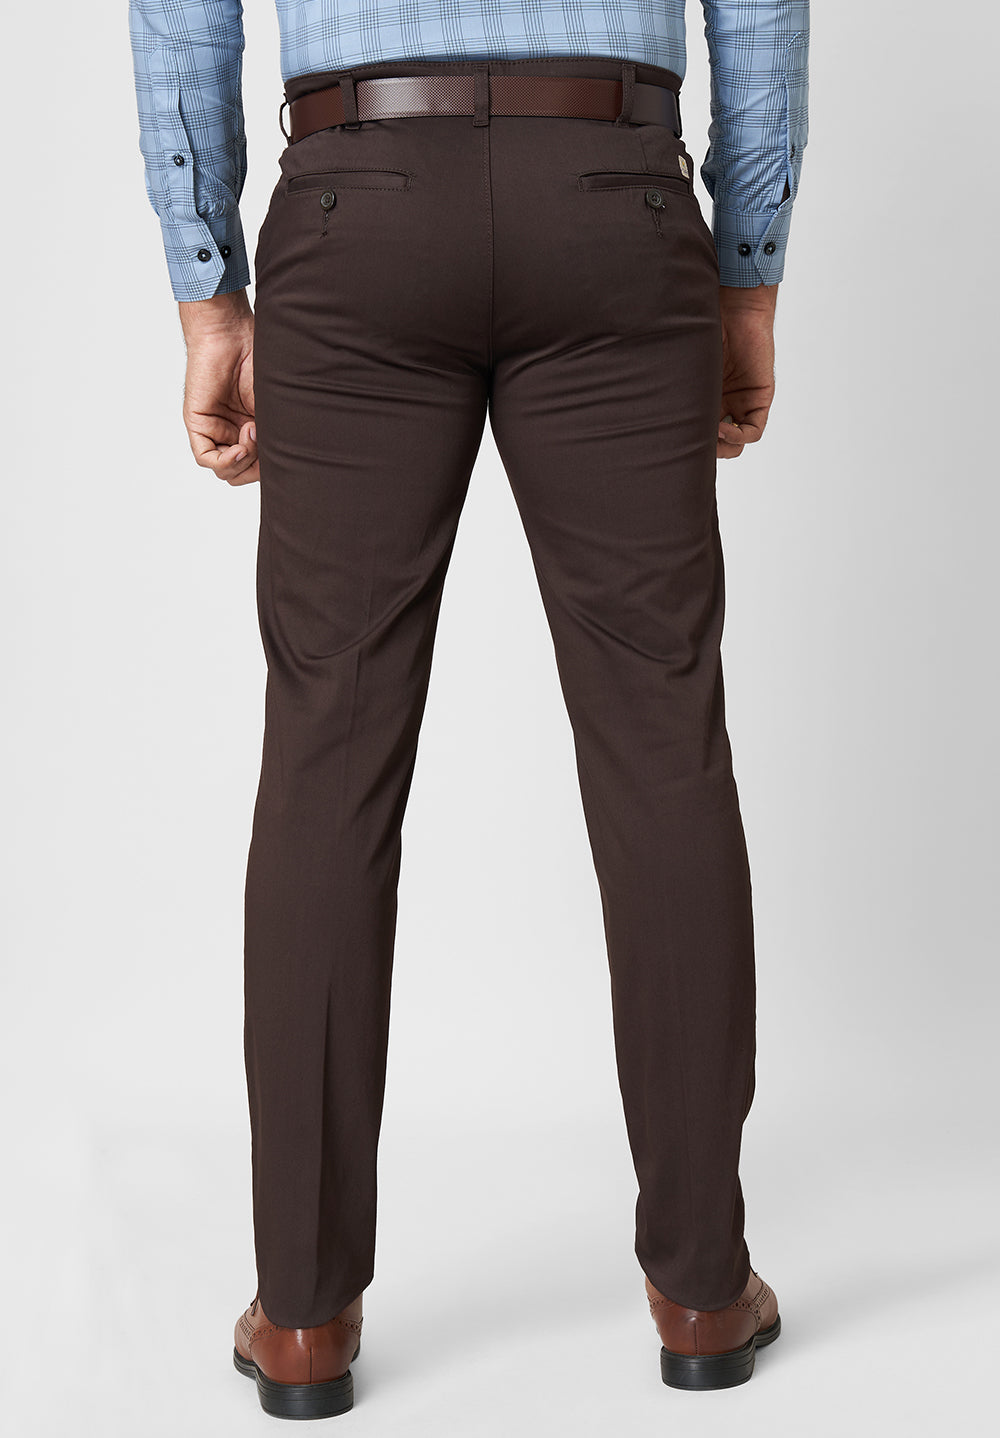 Blue Slim Fit Cotton Pants for Men by GentWith.com